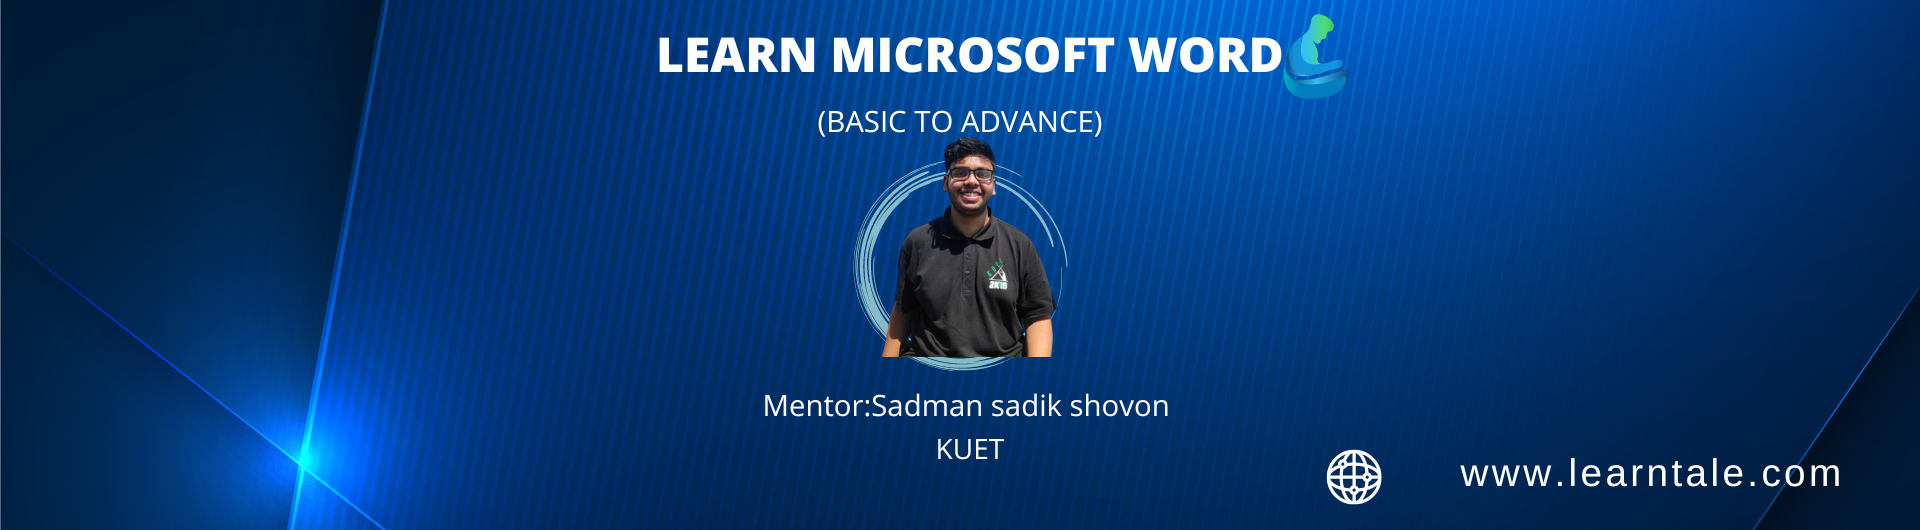 Microsoft Word Basic to Advance